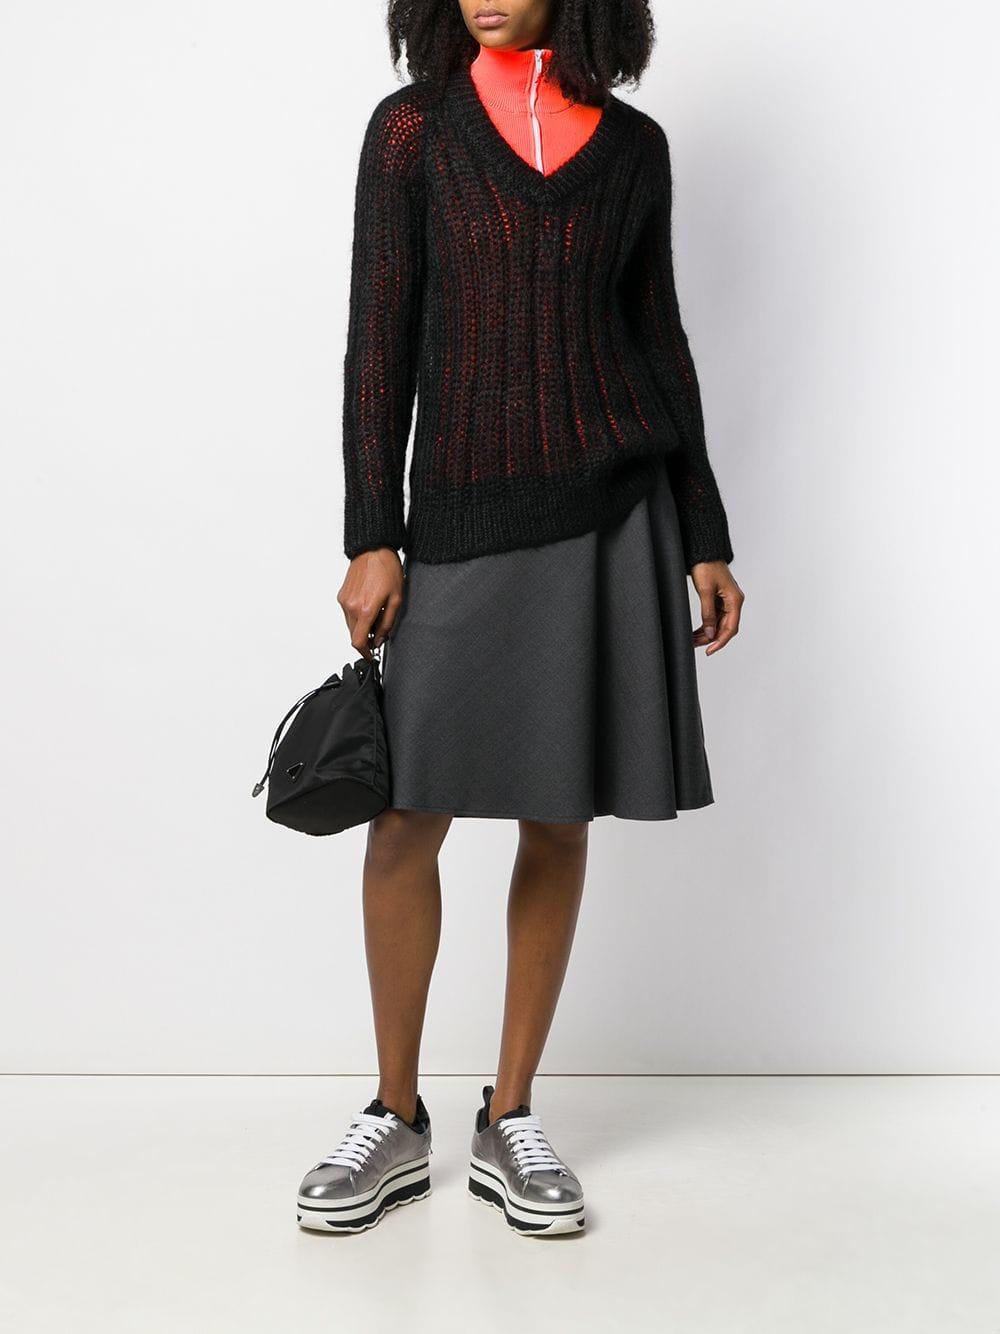 Prada Vneck Loose Knit Sweater in Black Lyst